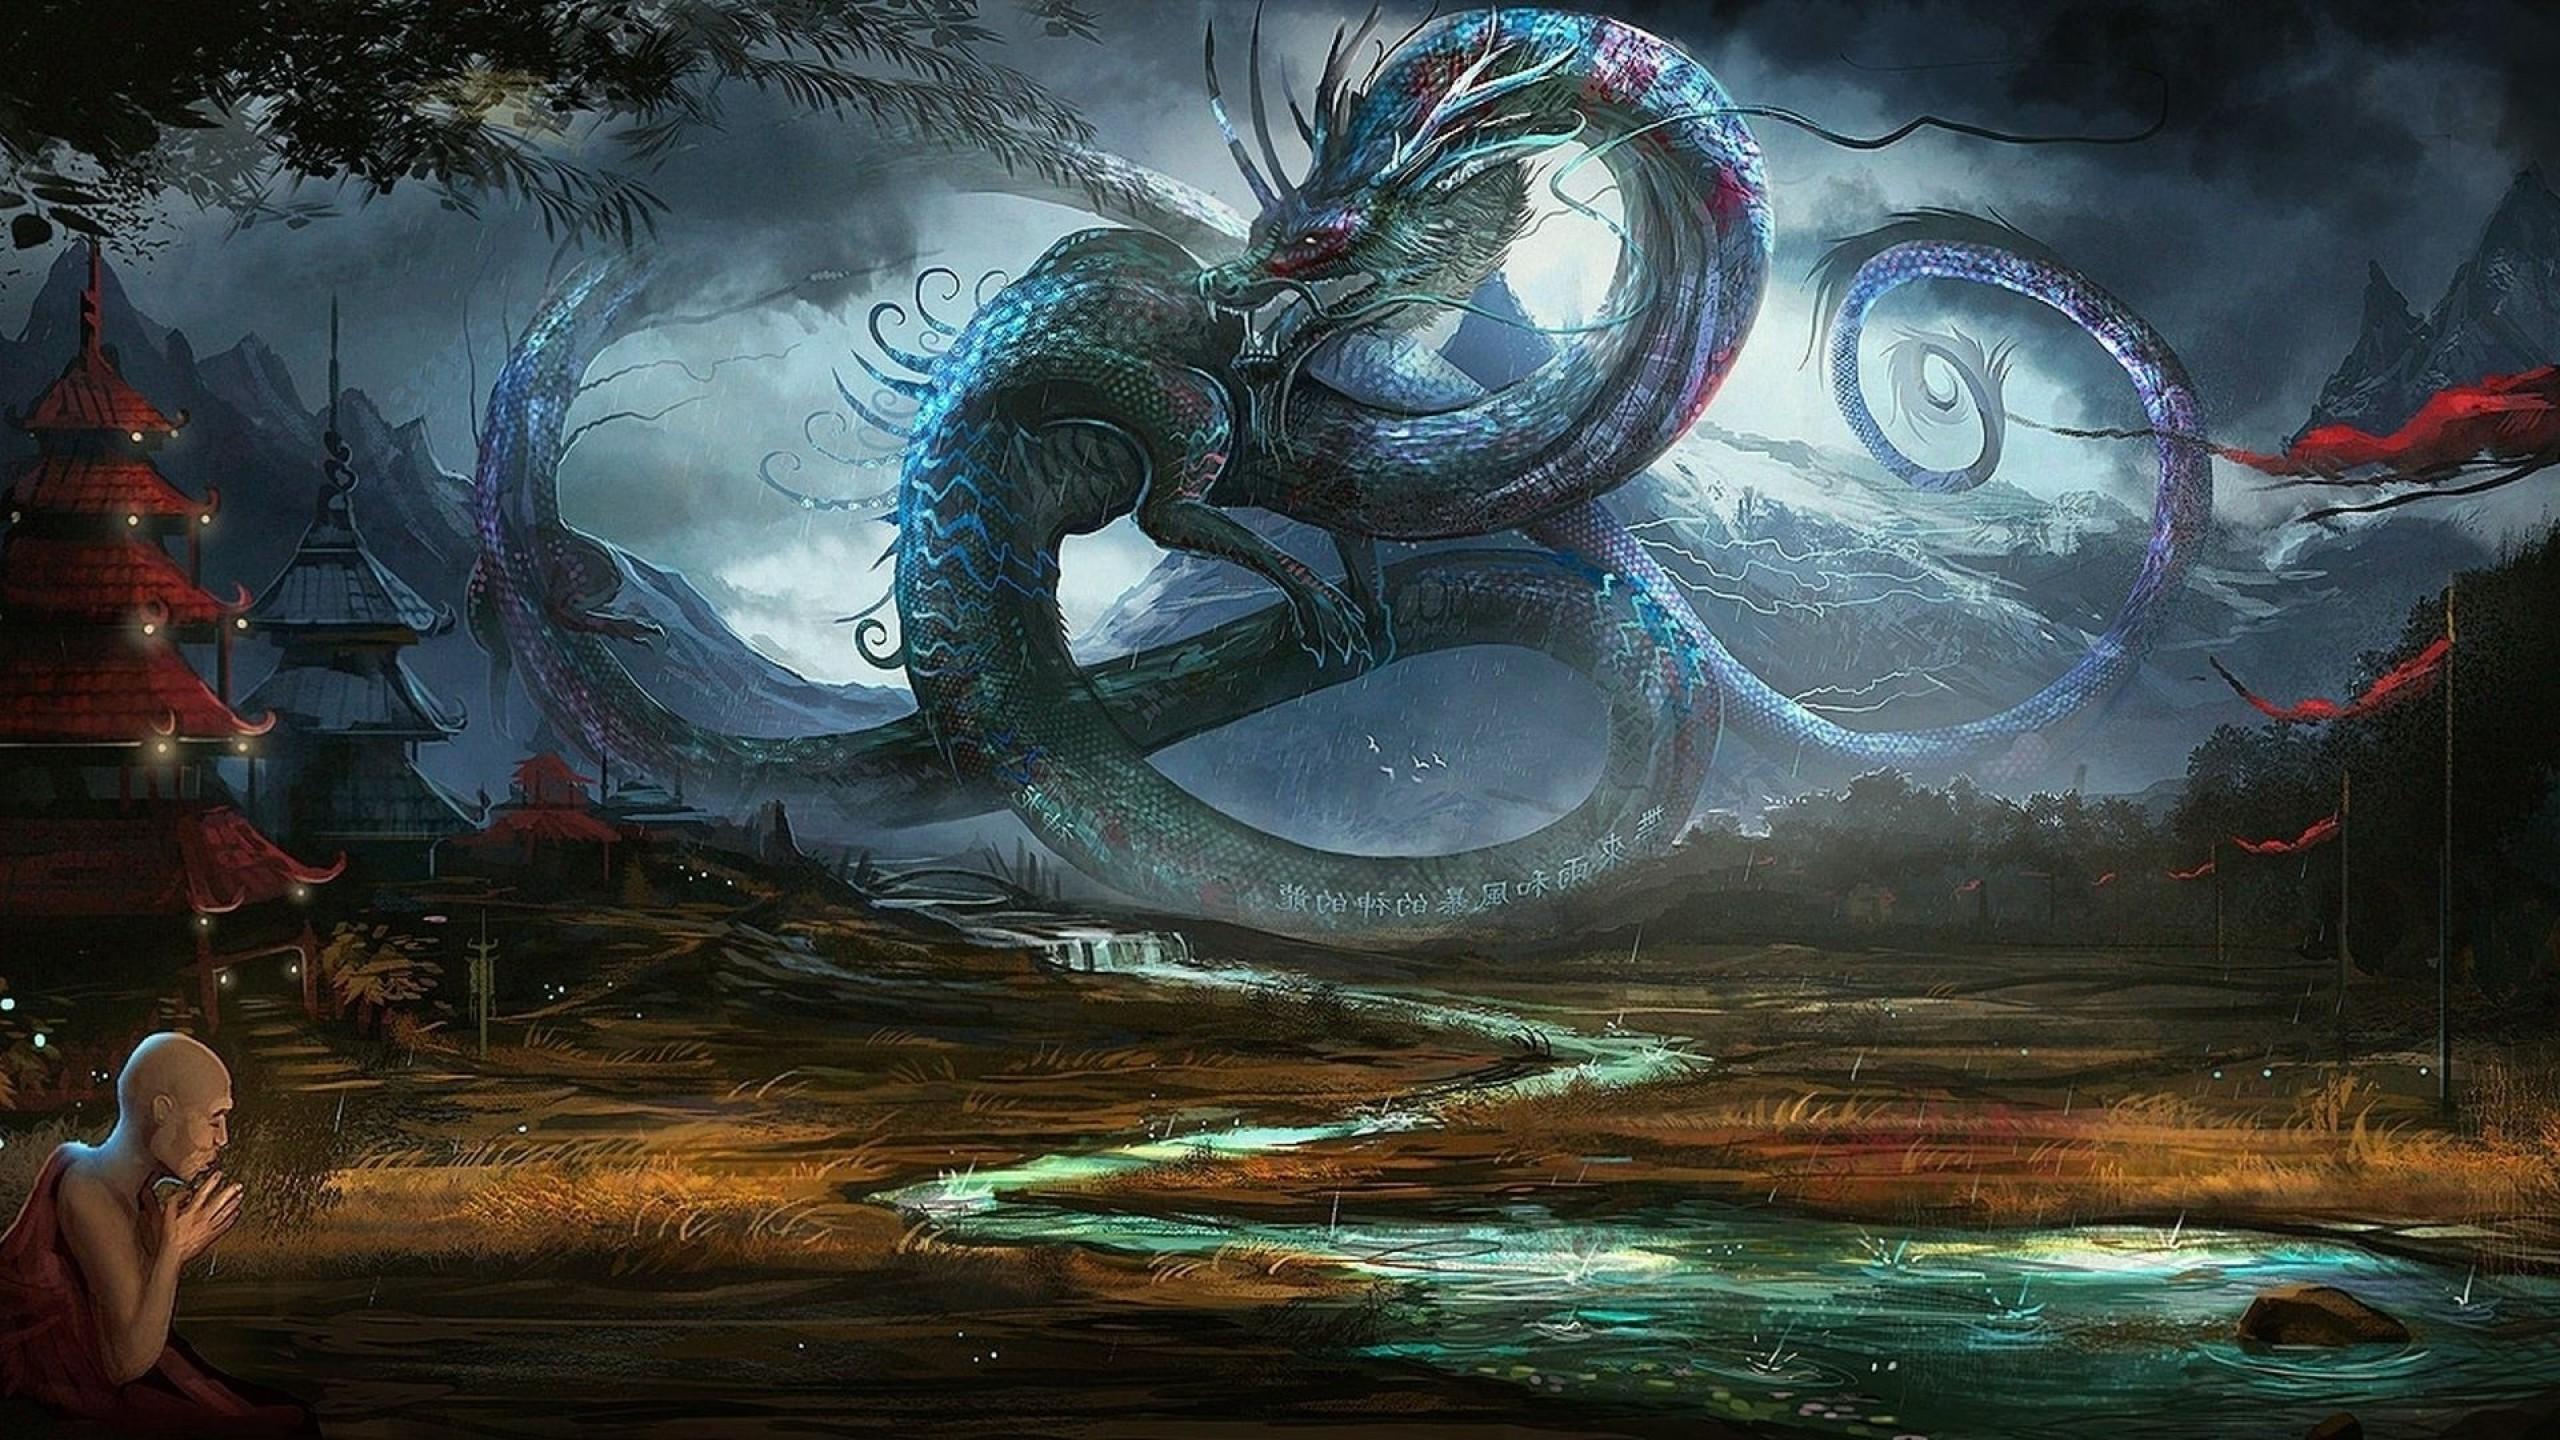 Great Dragons in River Wallpaper